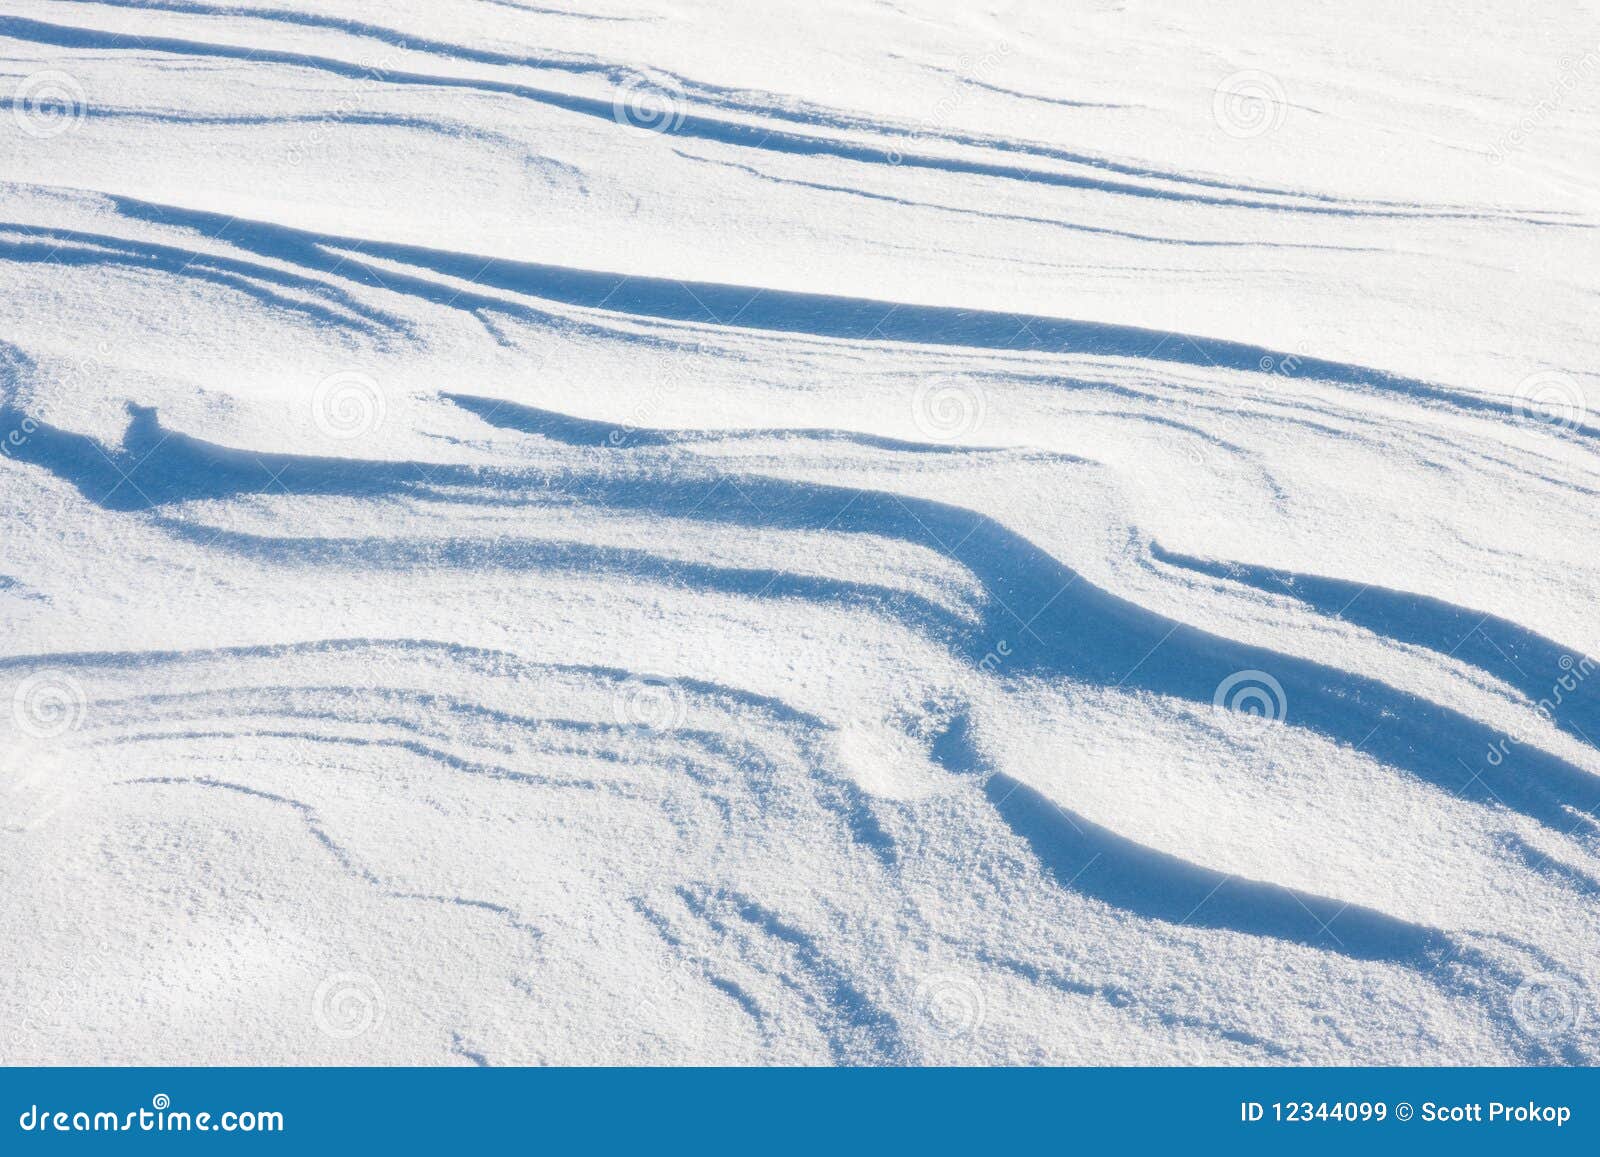 clipart snow drifts - photo #24